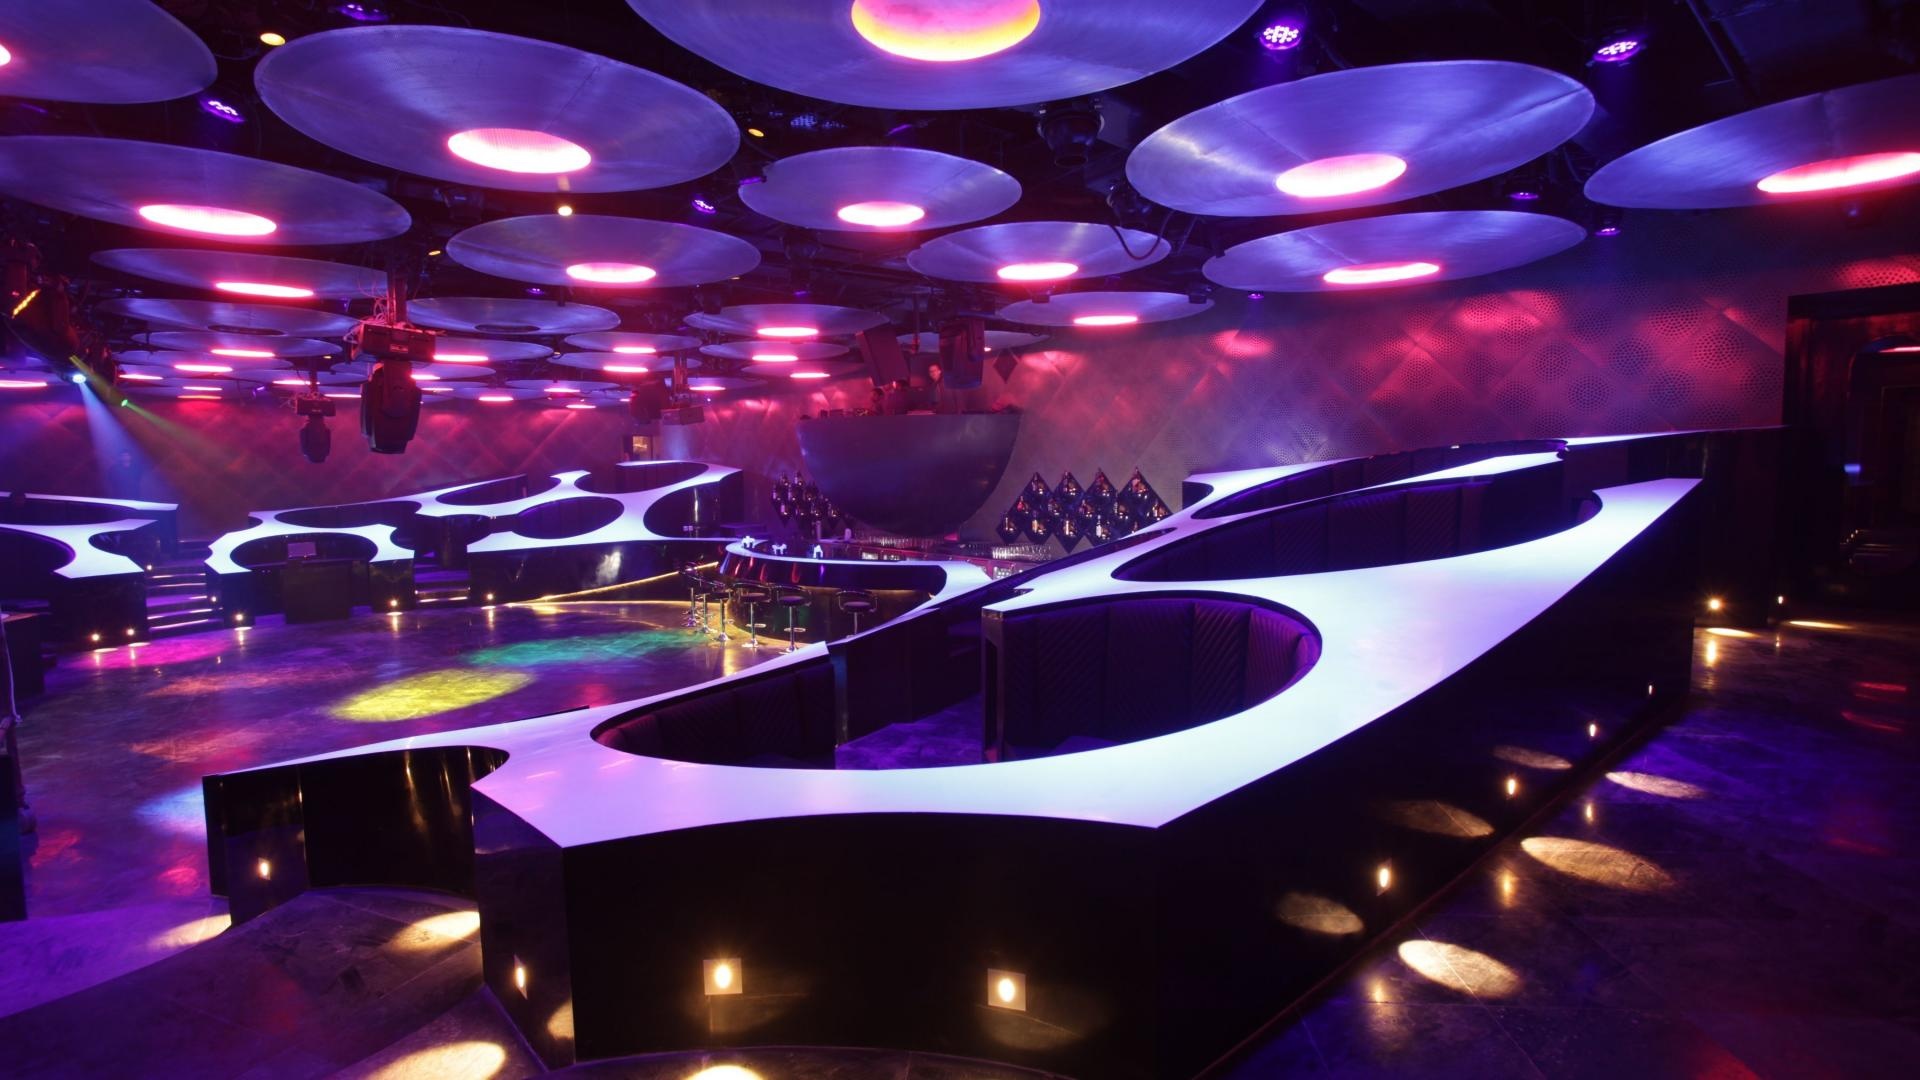 Nightclub: An entertainment venue, Dance floor, Bar, Loud amplified music. 1920x1080 Full HD Wallpaper.